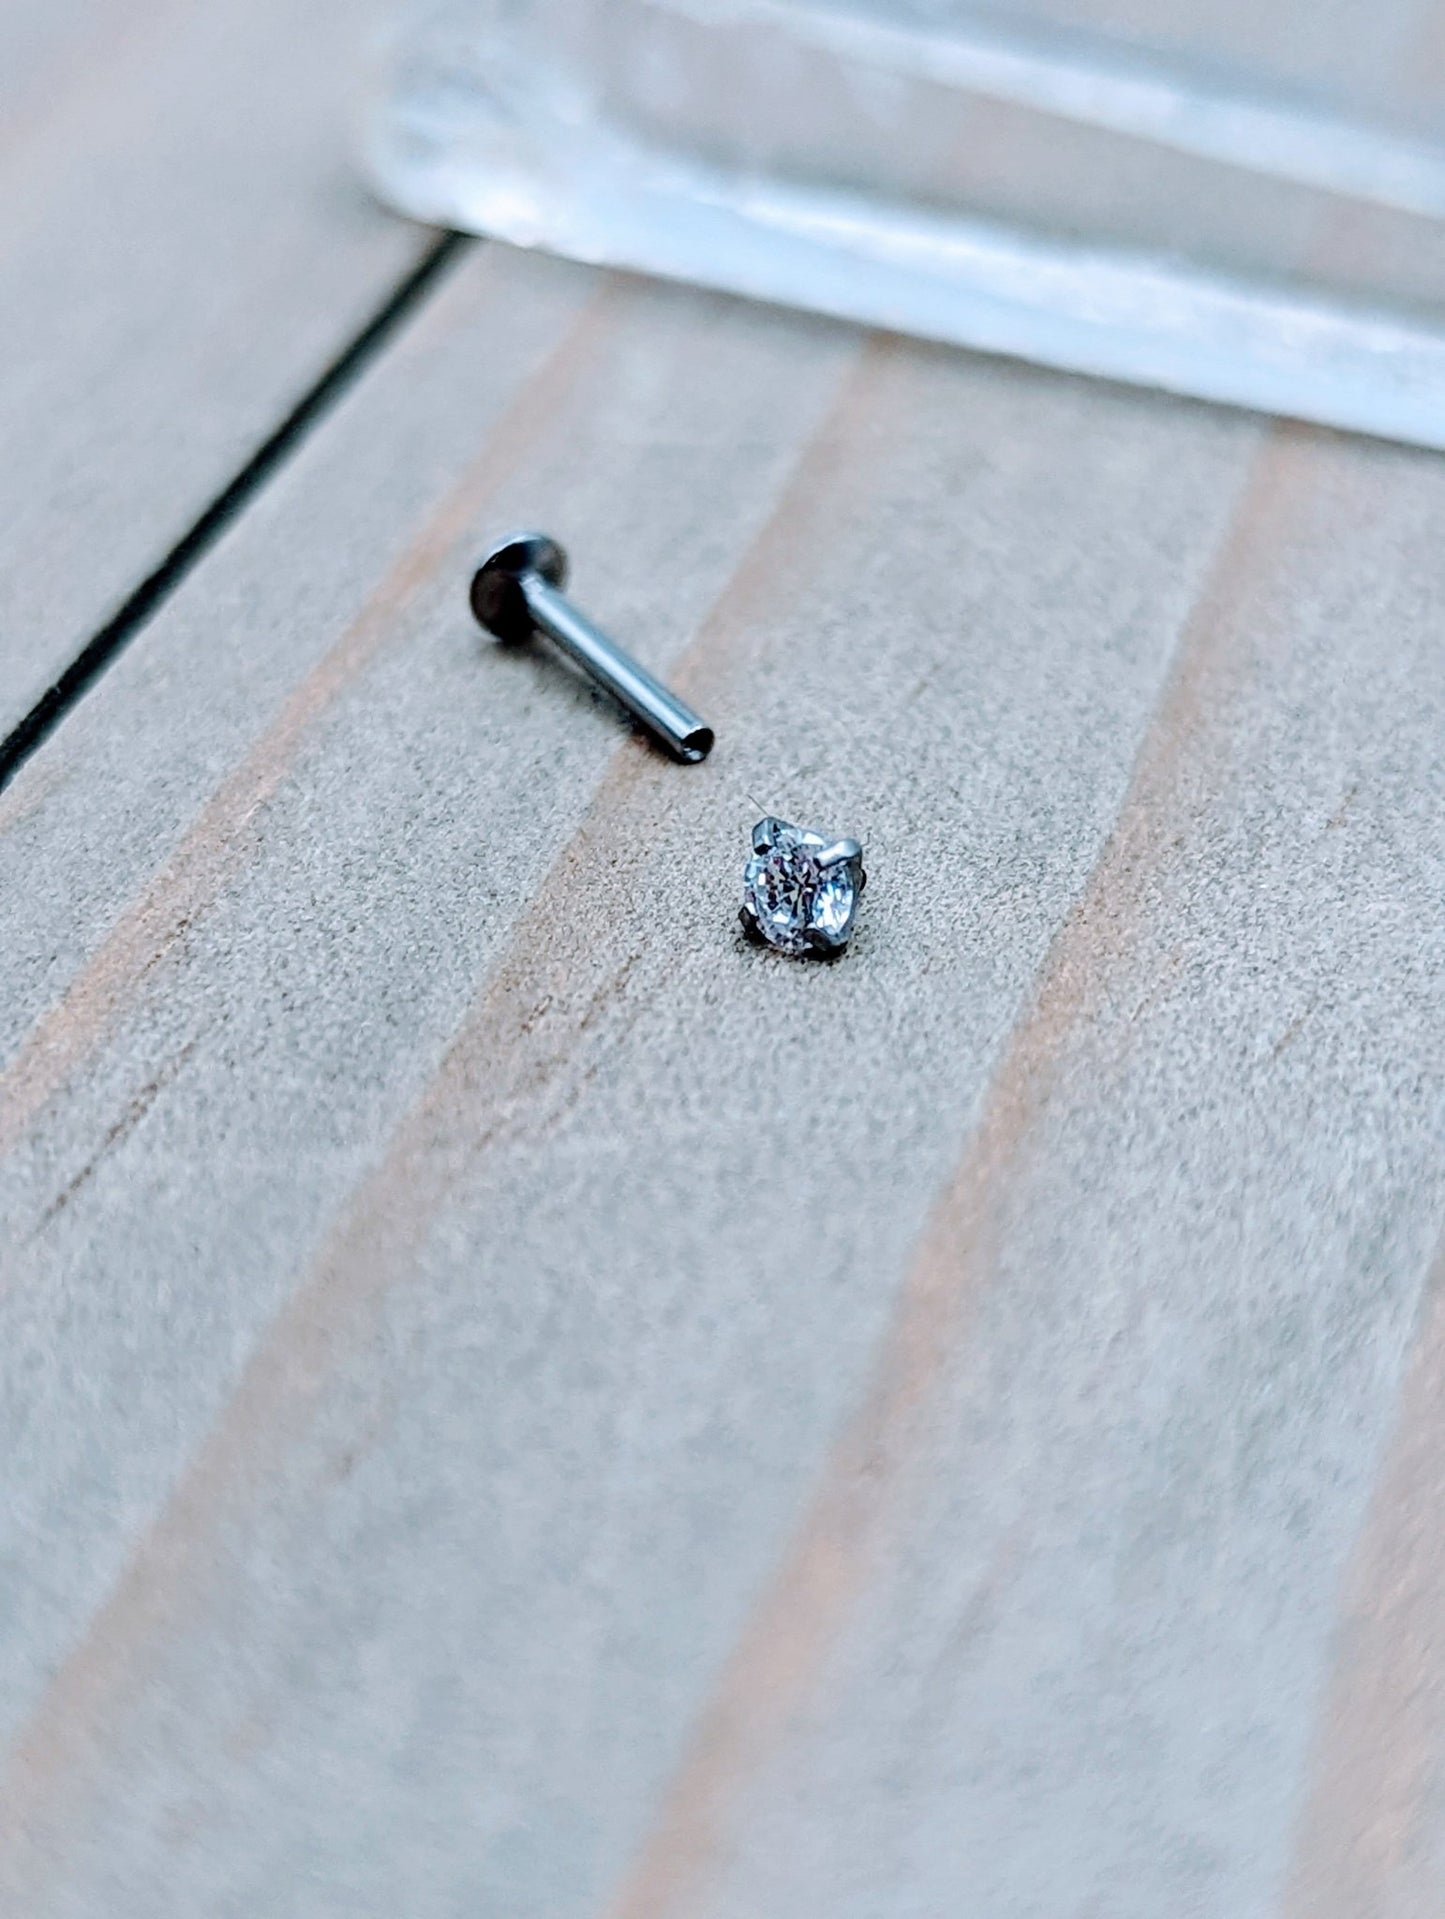 Titanium flat back earring set of 3 gemstone ends 1 internally threade –  Siren Body Jewelry